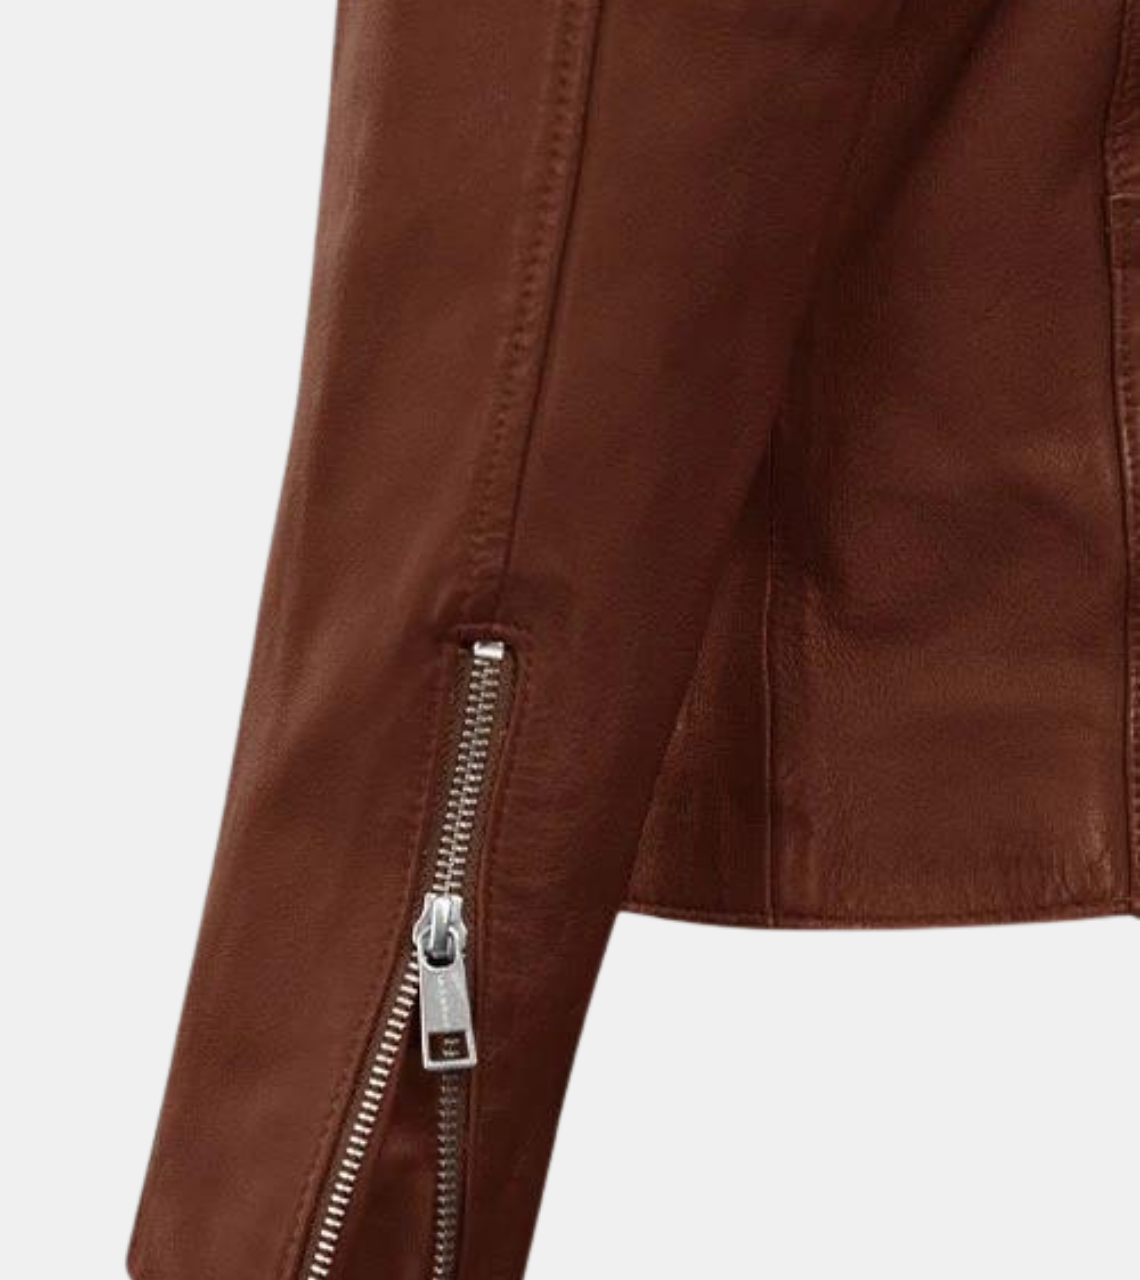 Gespare Men's Tan Brown Biker's Leather Jacket Cuff